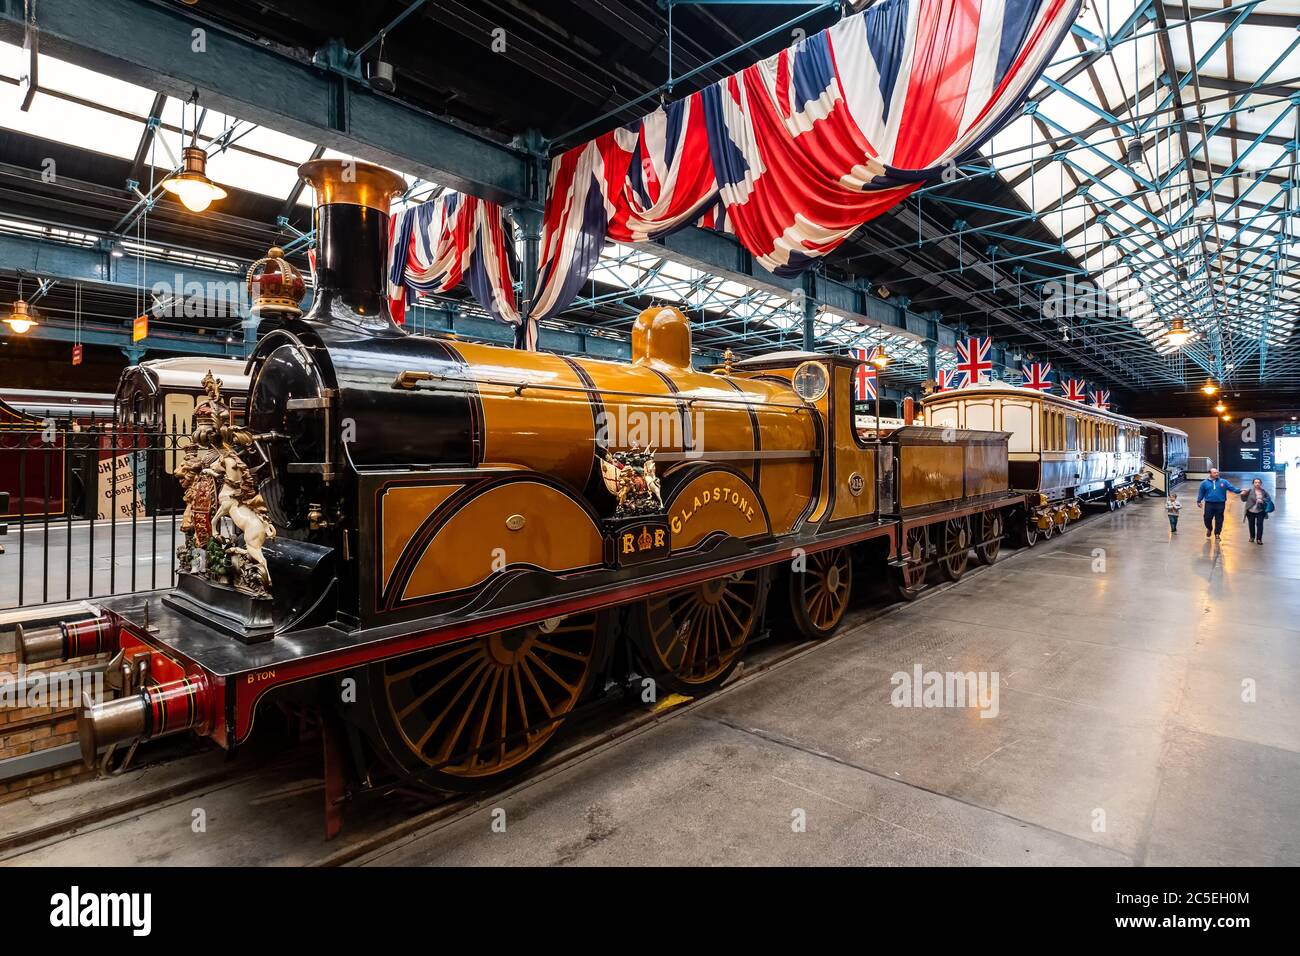 Steam museum in london фото 65